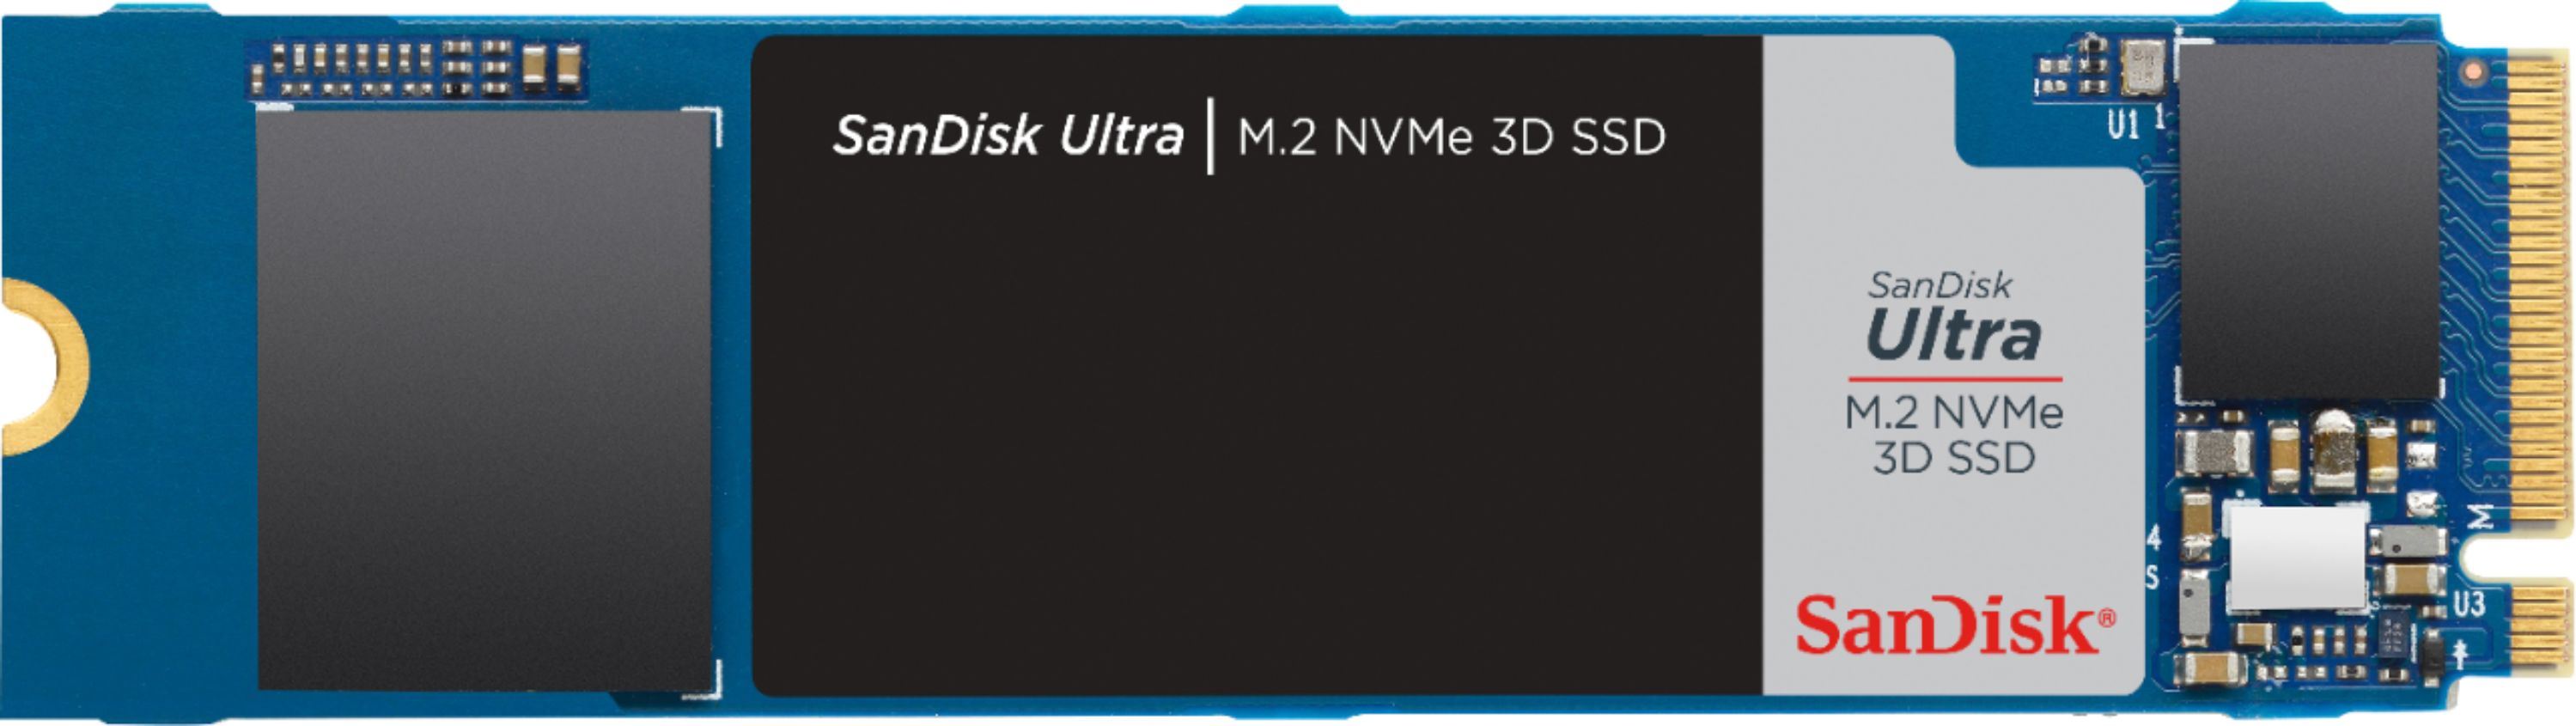 SanDisk Ultra 1TB Internal PCIe Gen 3 x 4 NVMe Solid State Drive SDSSDH3N-1T00-G25 - Best Buy $94.99